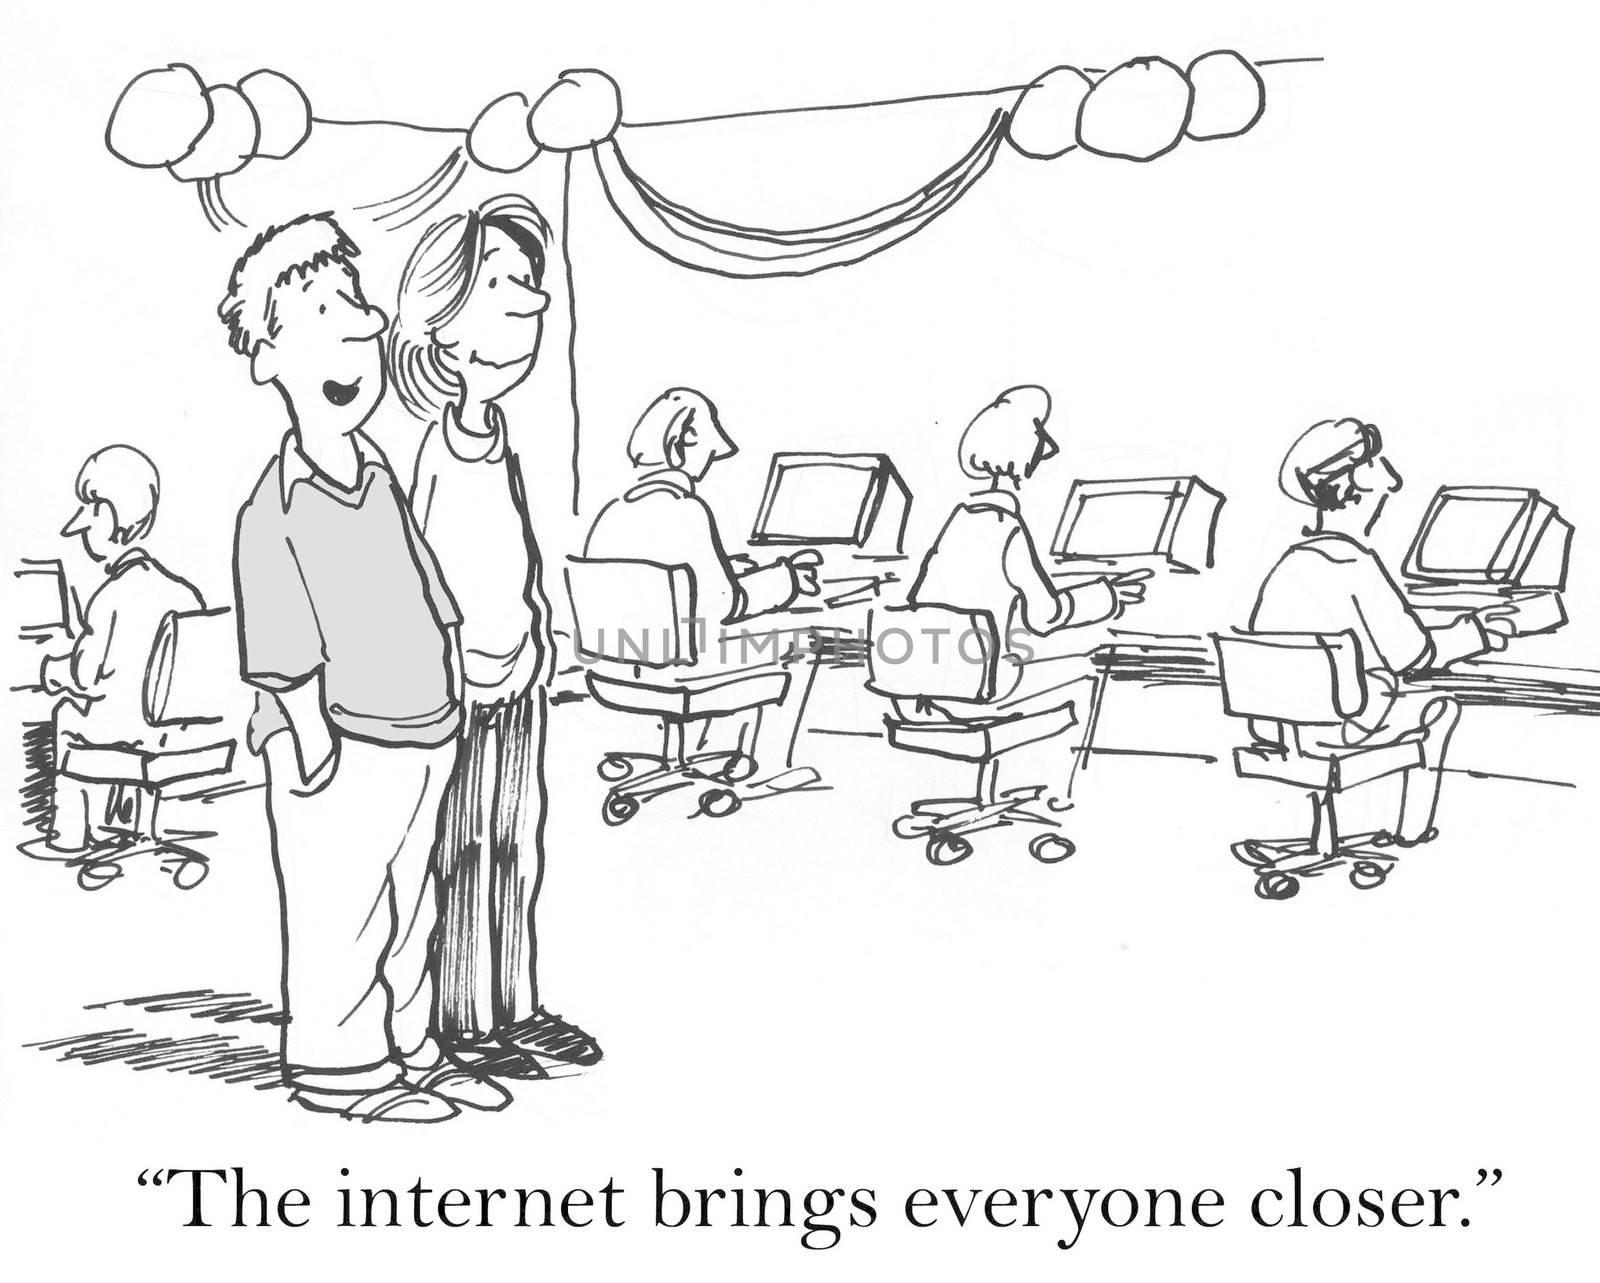 "The internet brings everyone closer."